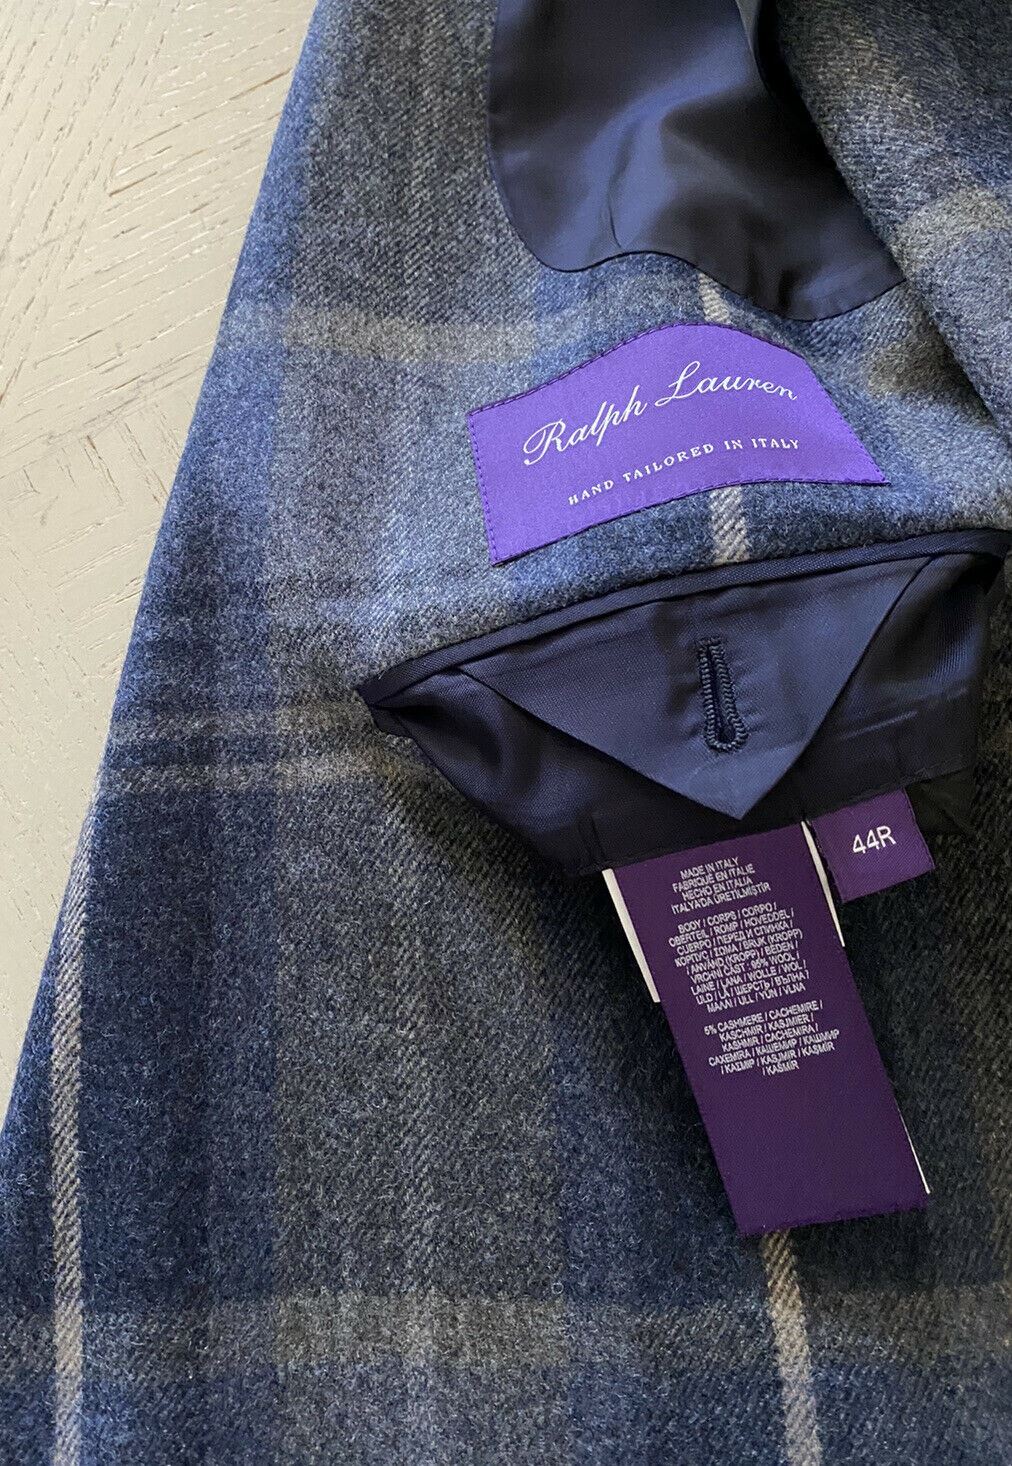 NWT $2295 Ralph Lauren Purple Label Men Sport Coat Blazer Blue Plaid 44 US Italy